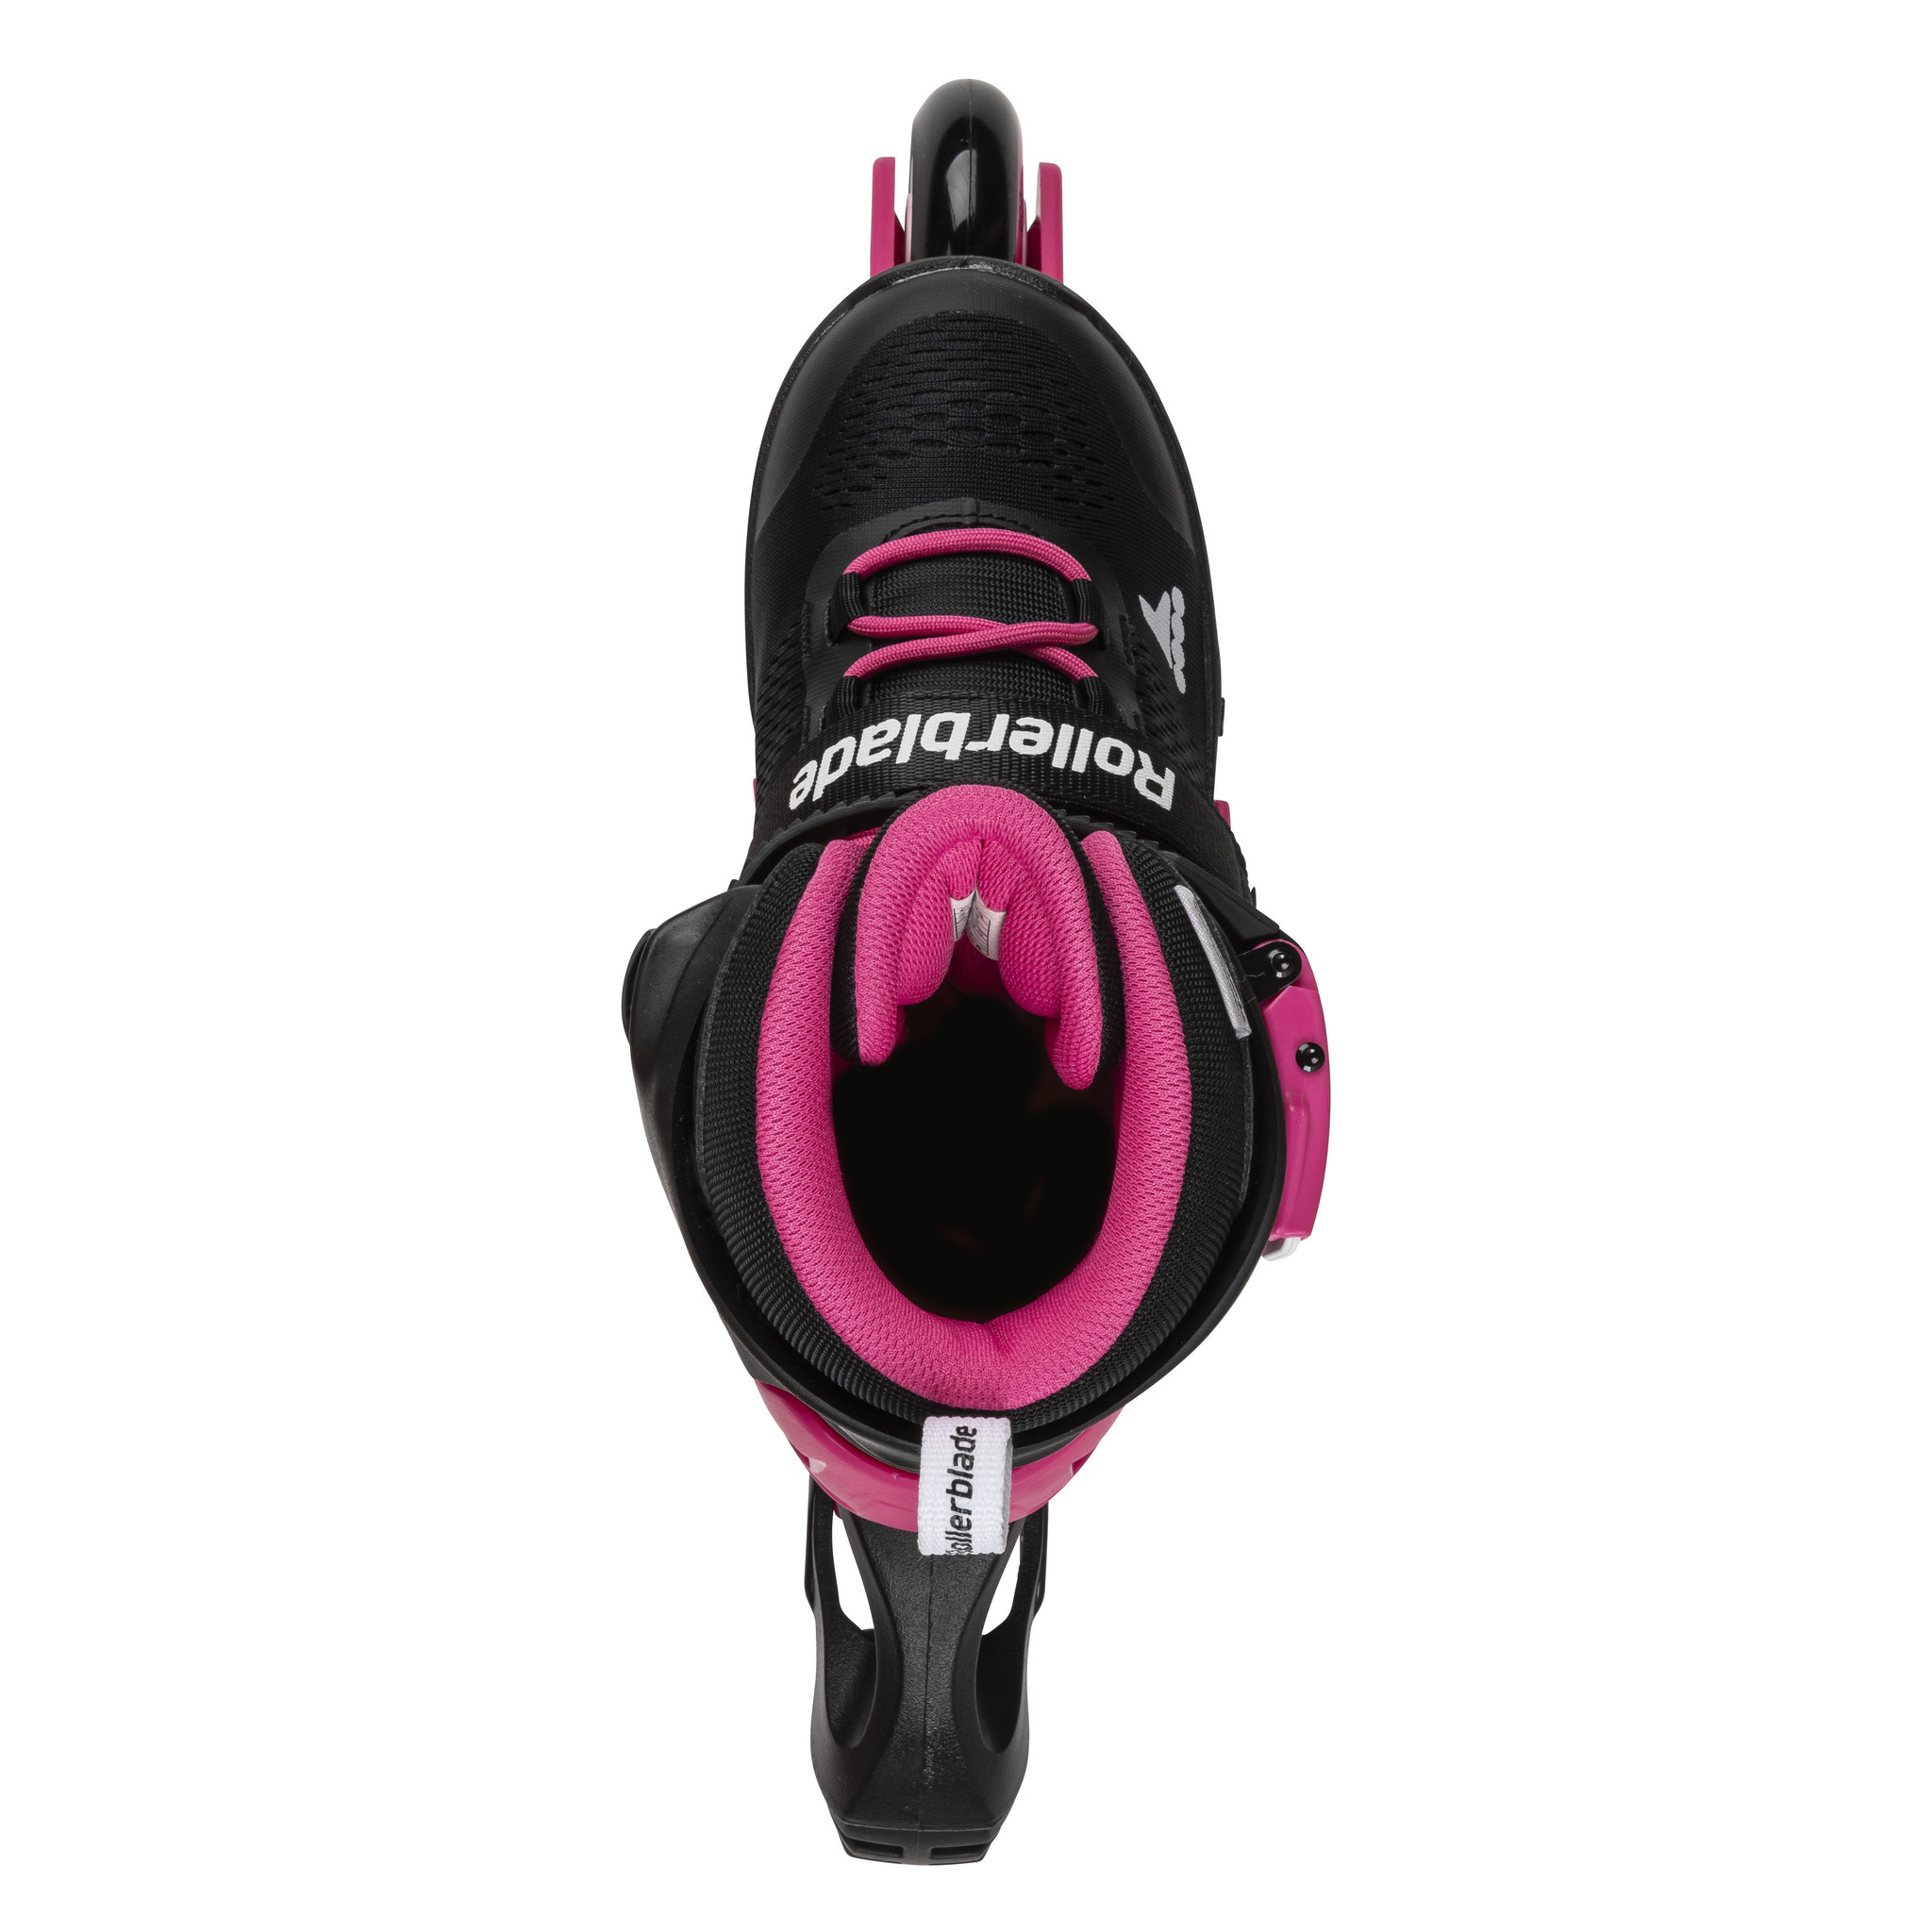 Rollerblade Rollerblade Microblade G Black / Neon-Pink